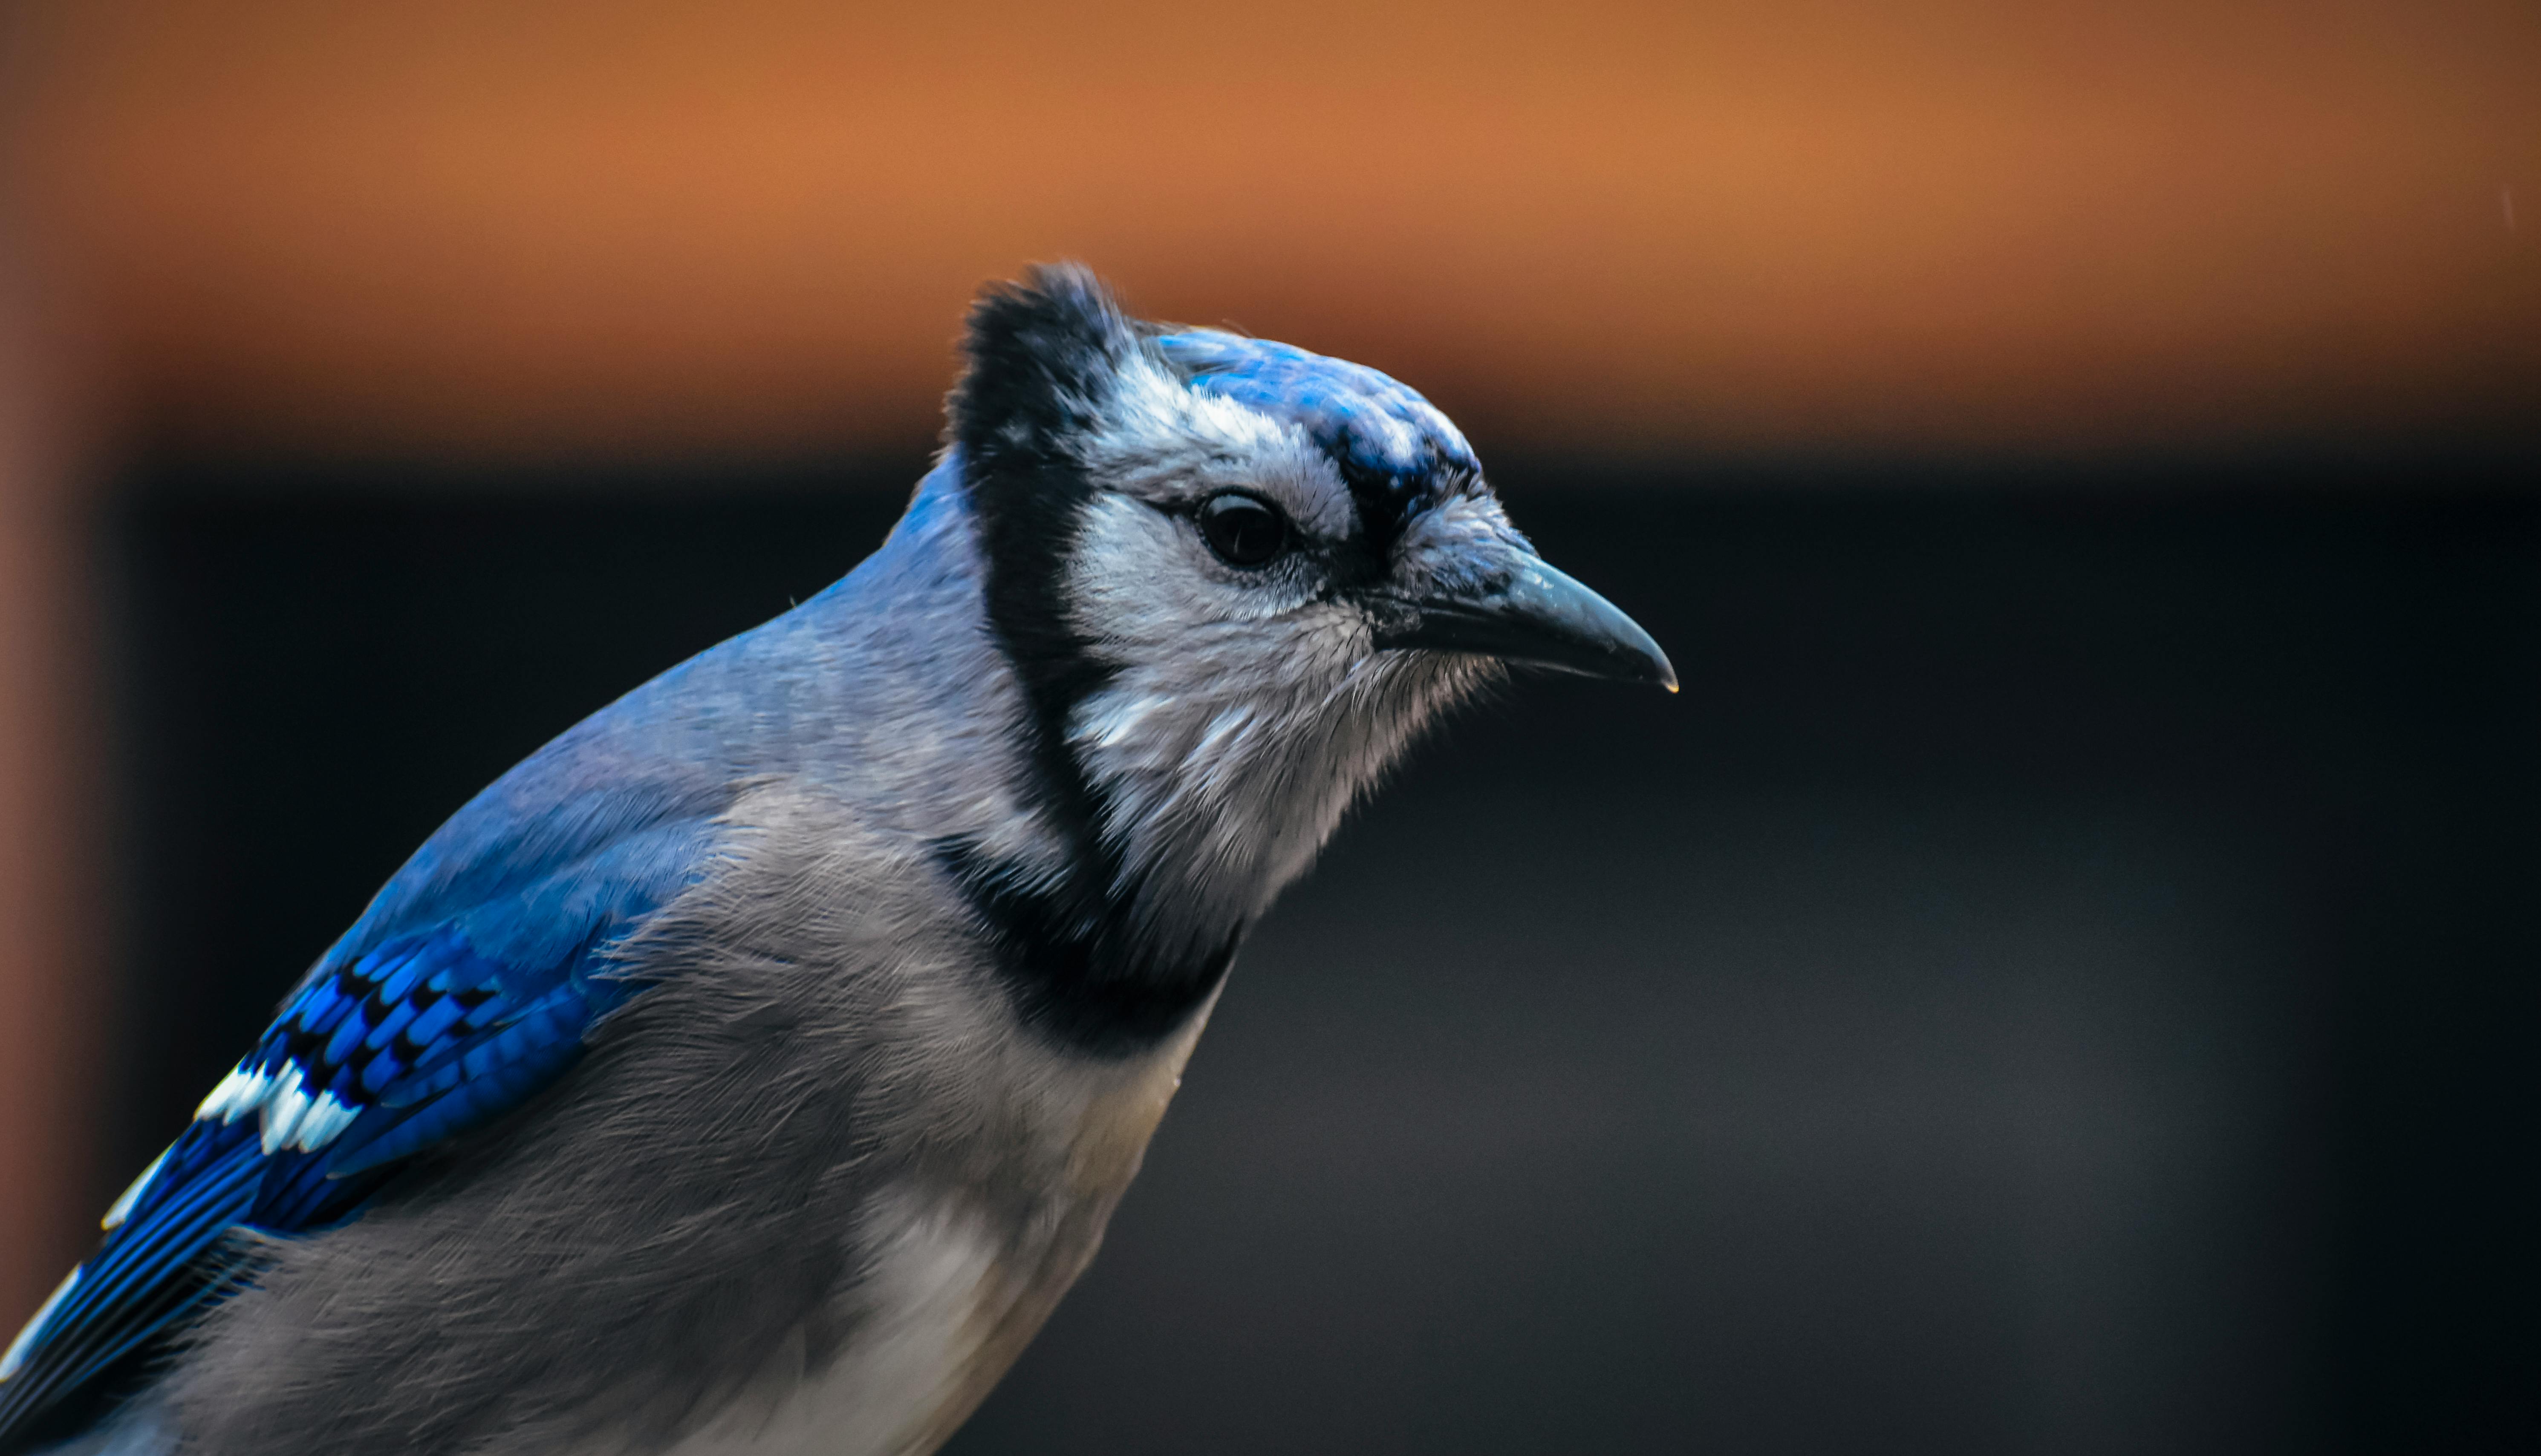 Blue Jay Bird Photos, Download The BEST Free Blue Jay Bird Stock